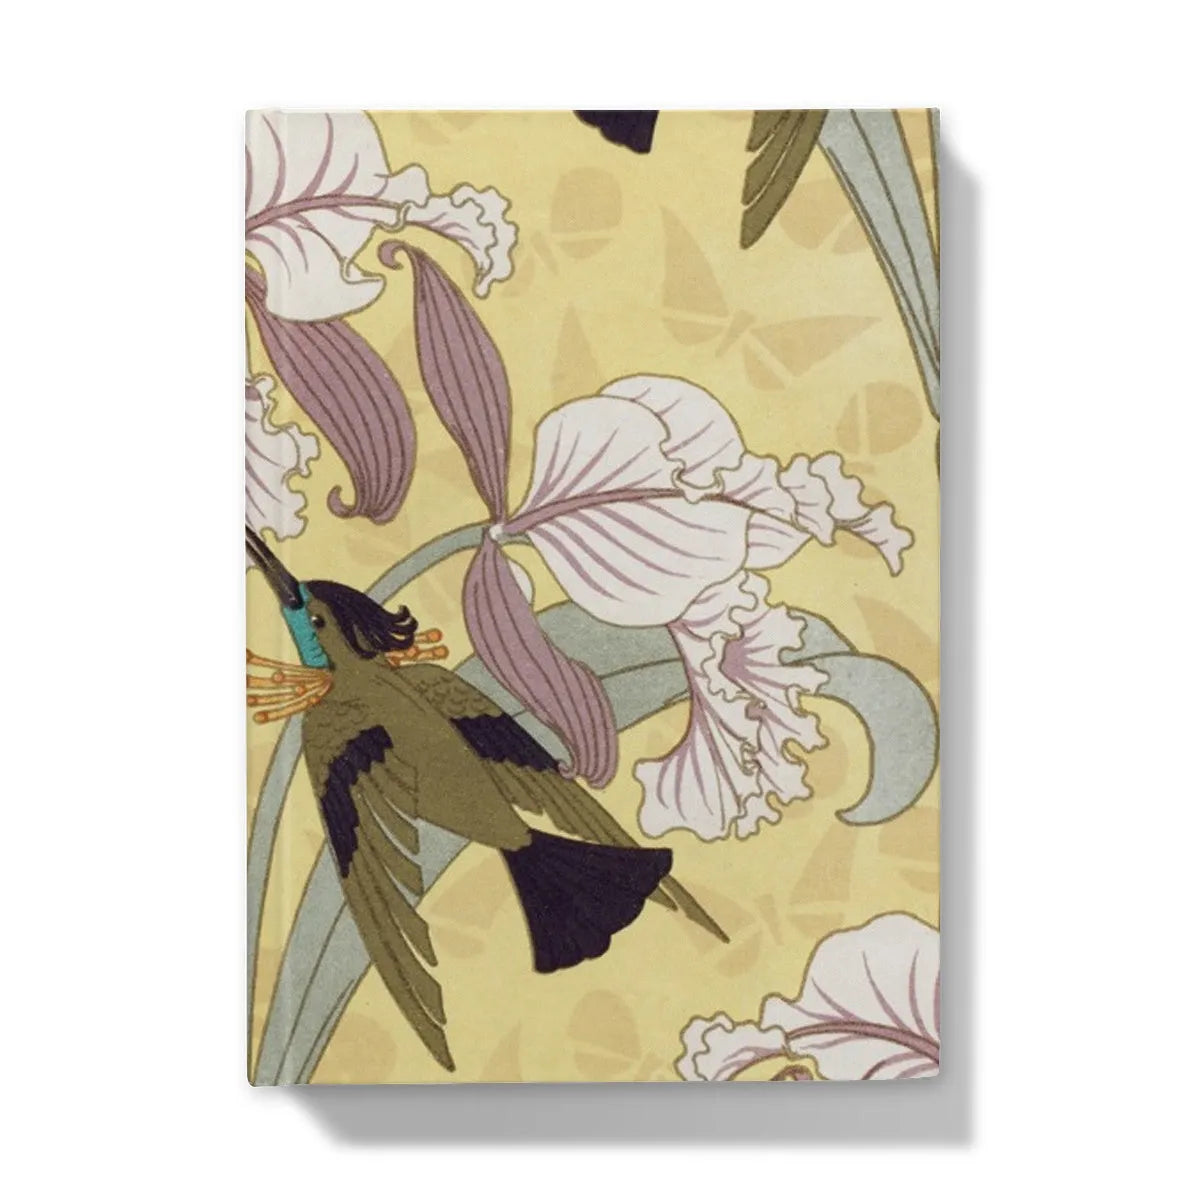 Oiseaux-mouches Et Orchidées By Maurice Pillard Verneuil Hardback Journal - 5’x7’ / 5’ x 7’ - Lined Paper